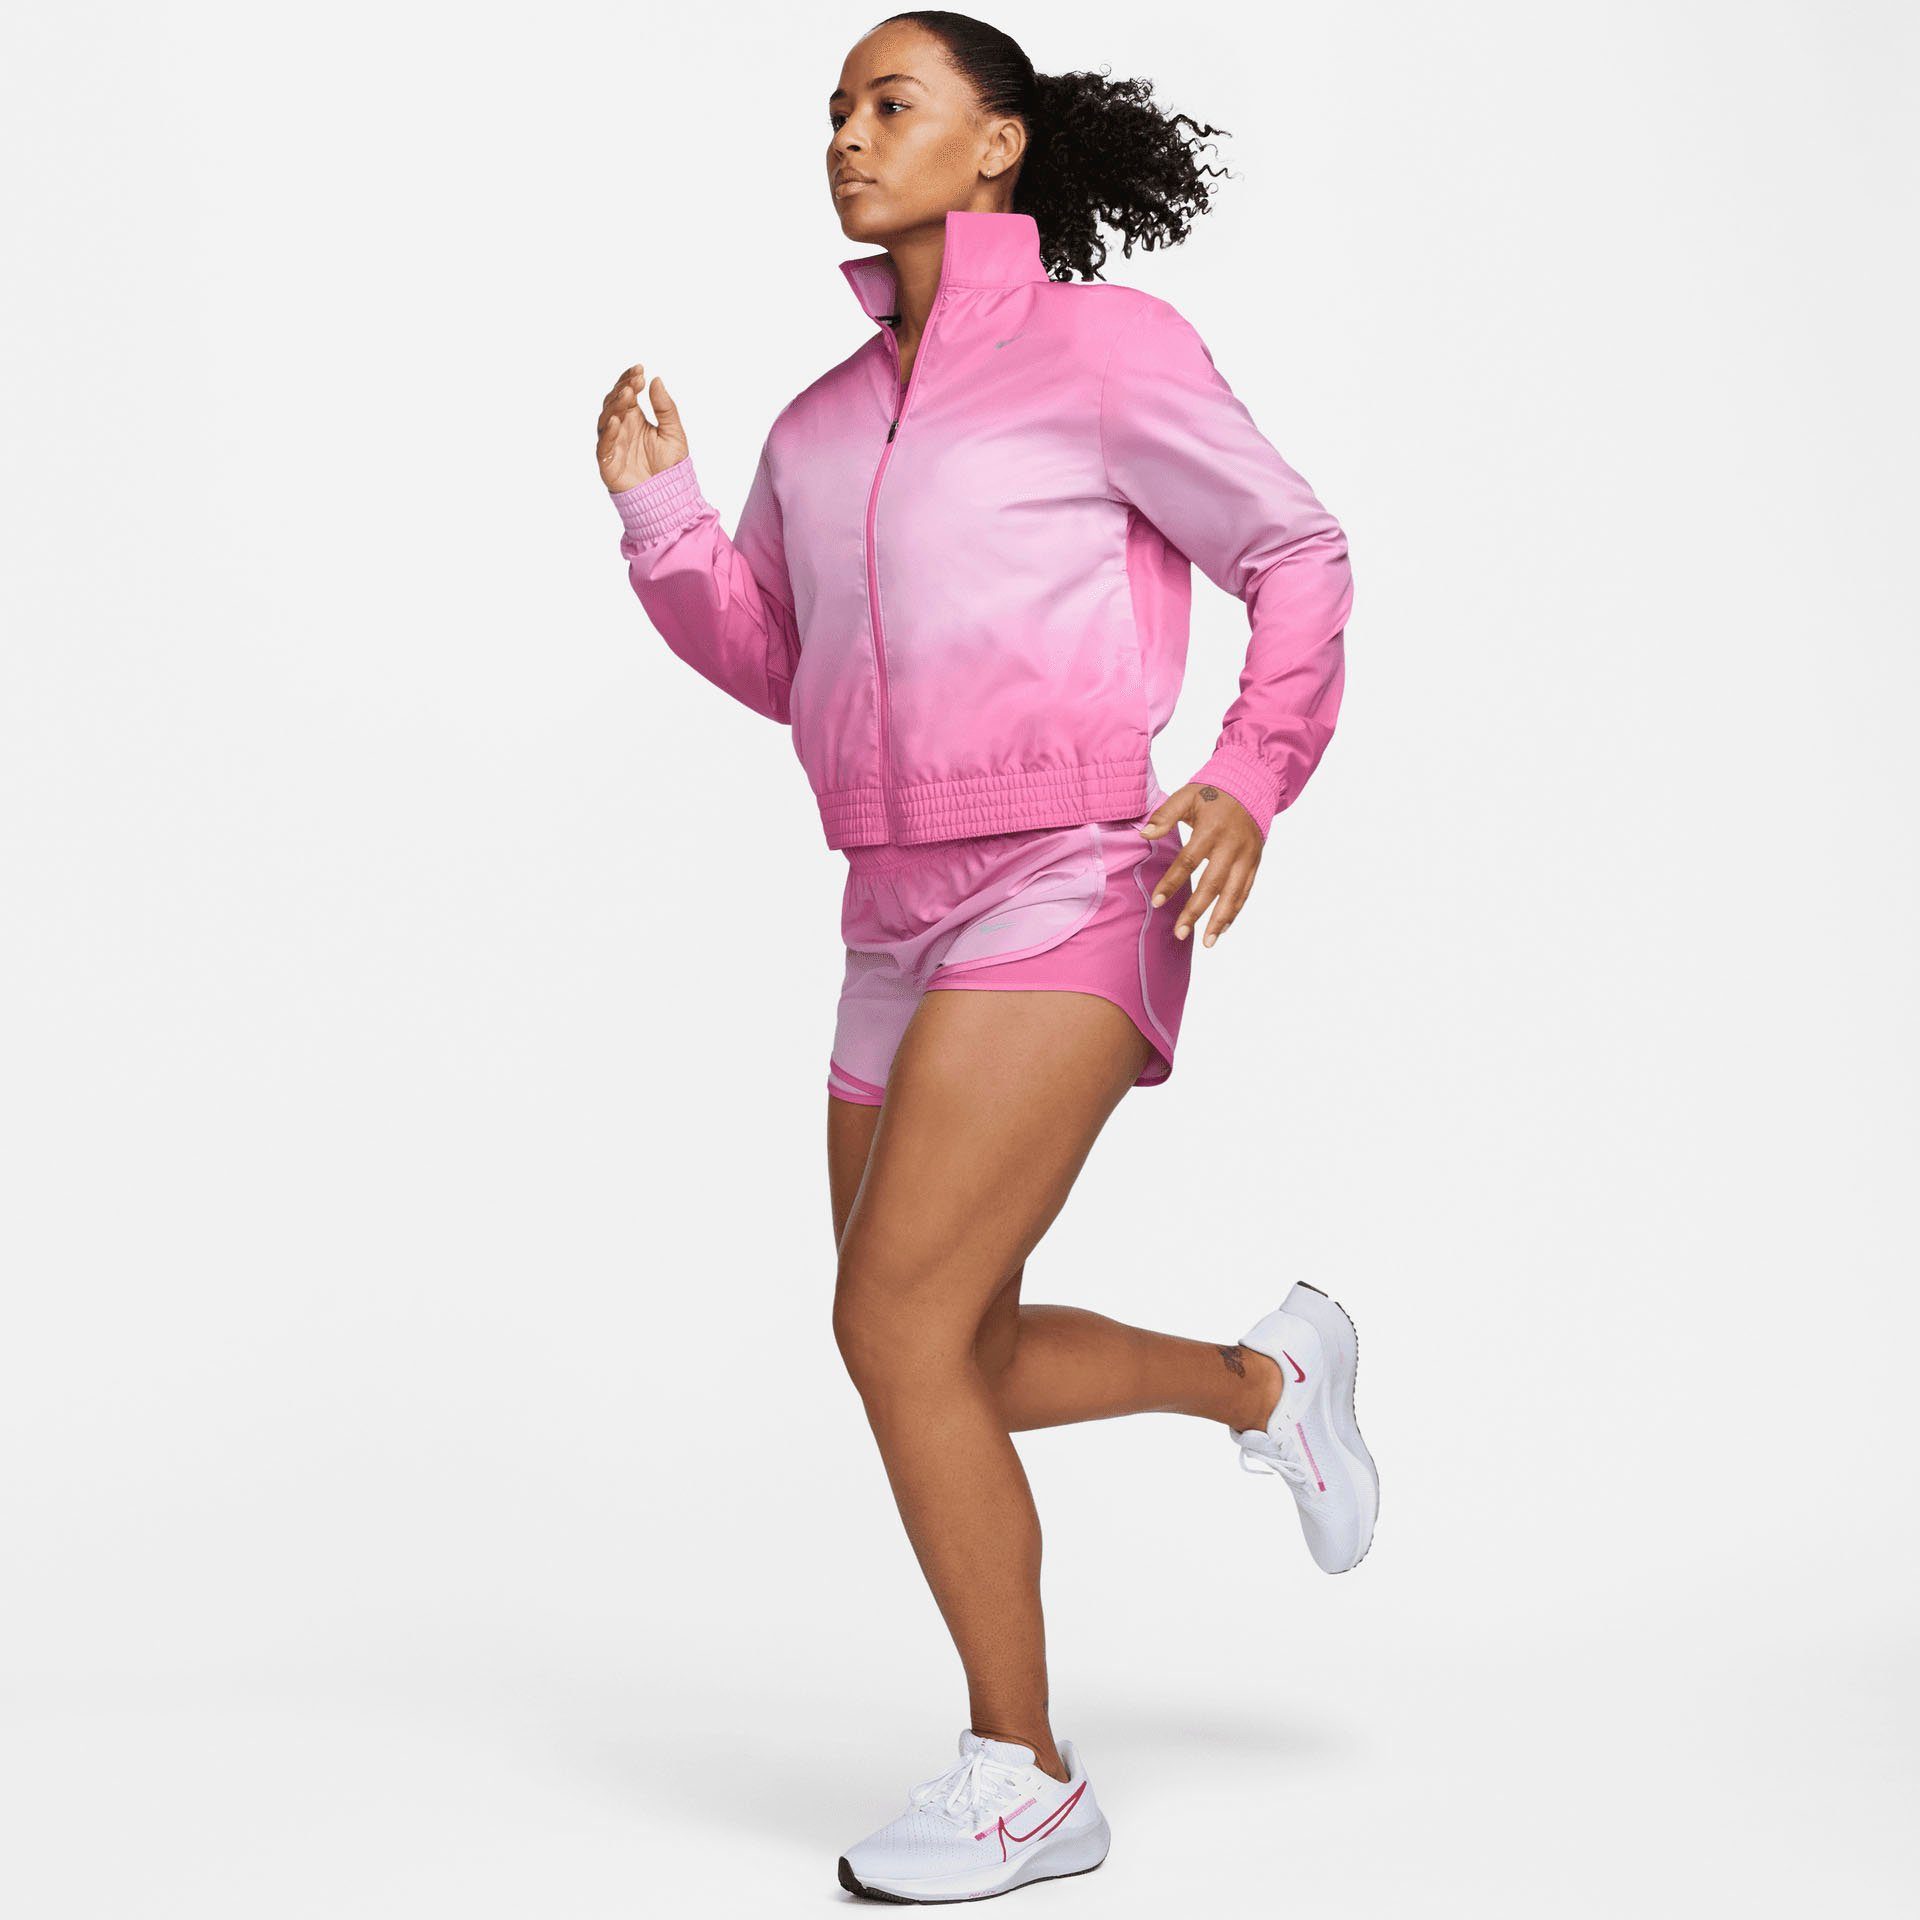 SILV Women's Running Swoosh Laufjacke Run Dri-FIT FUCHSIA/REFLECTIVE ACTIVE Nike Printed Jacket